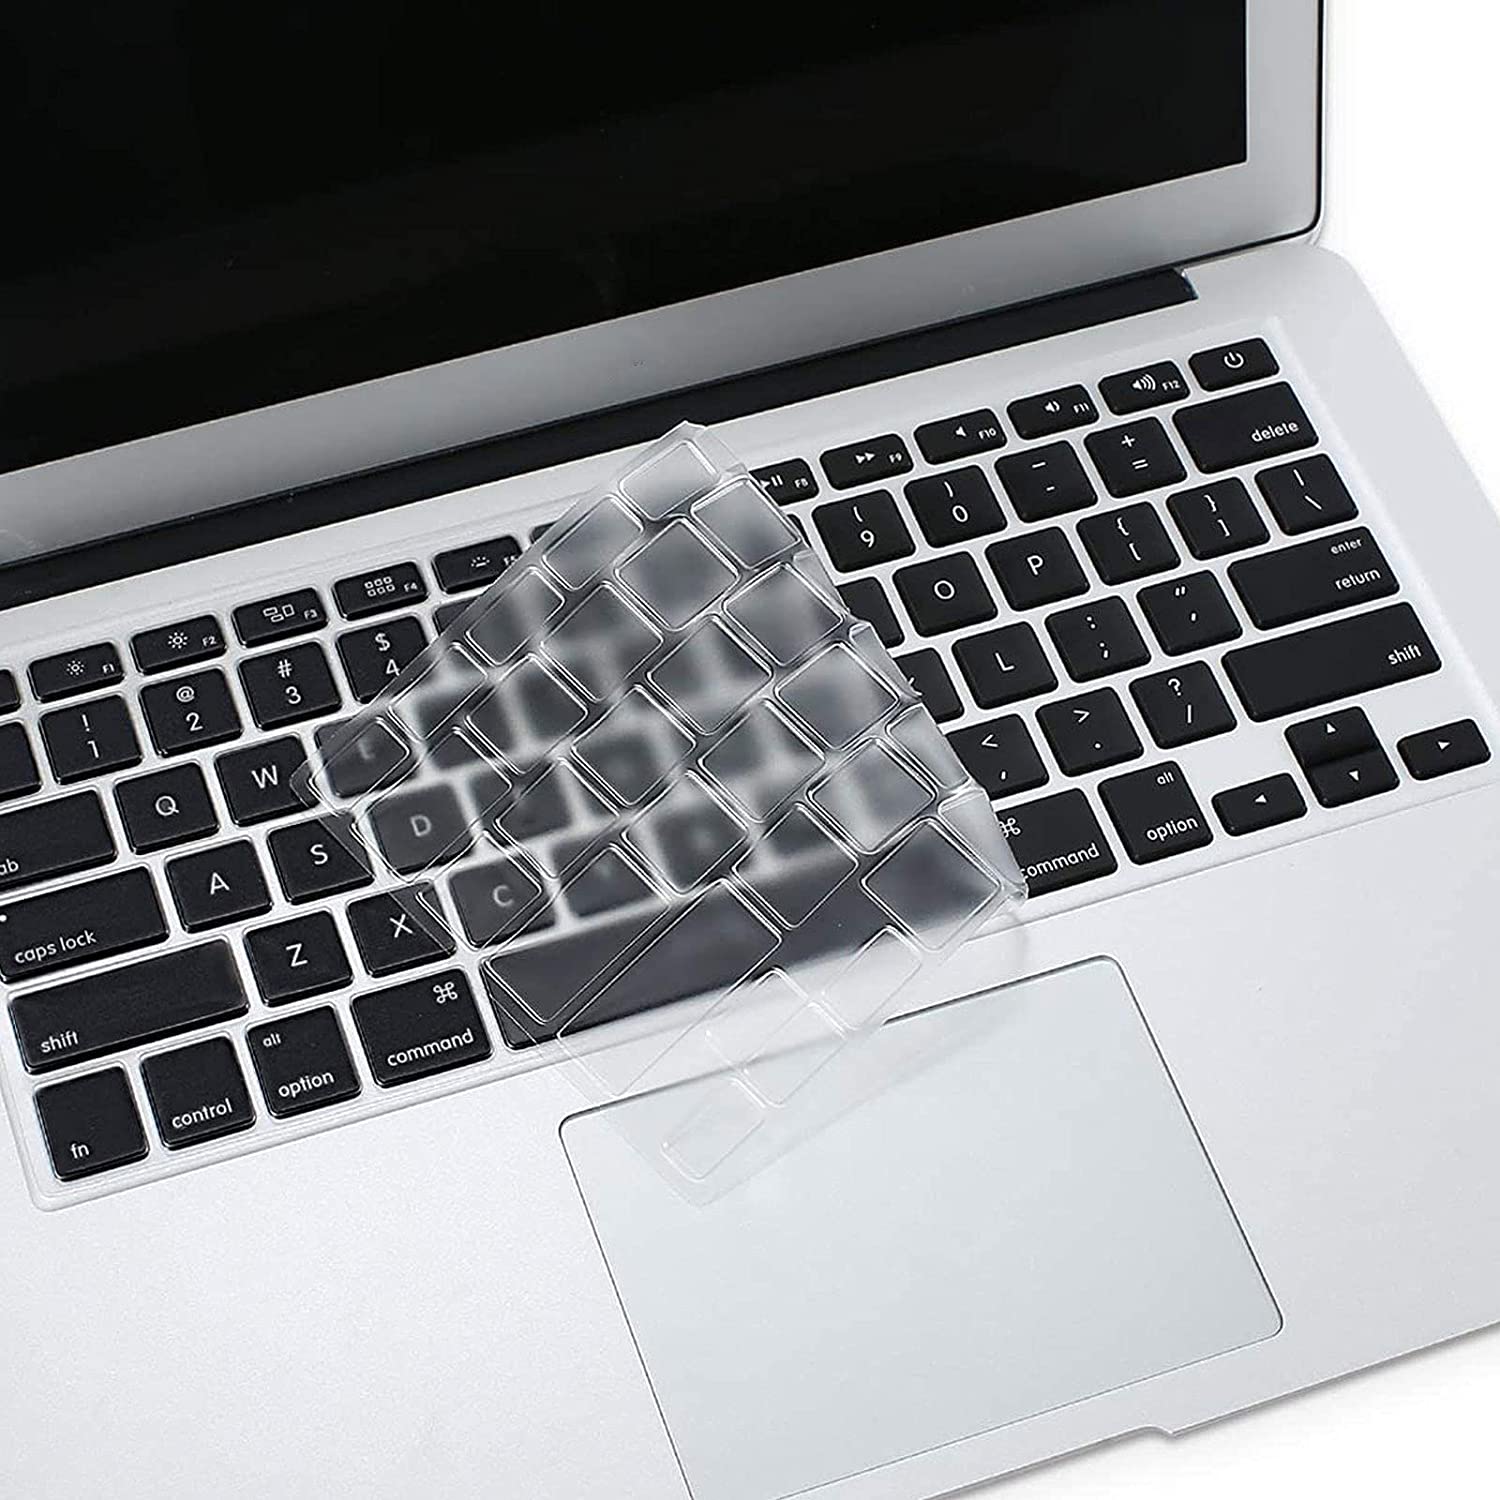 Practical Soft TPU Keyboard Protective Cover Film for MacBook Air 13inch (A1466/A1369/A1278/A1286/A1502/A1425/A1398)